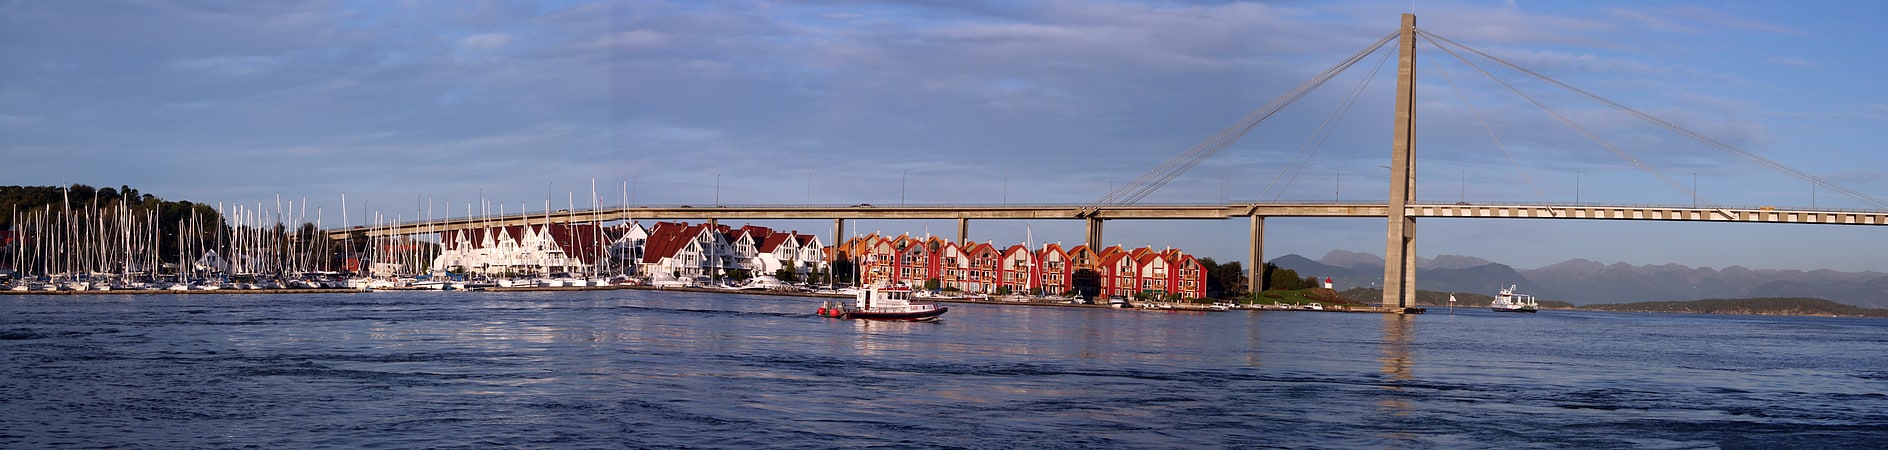 Cantilever spar cable-stayed bridge in Stavanger, Norway